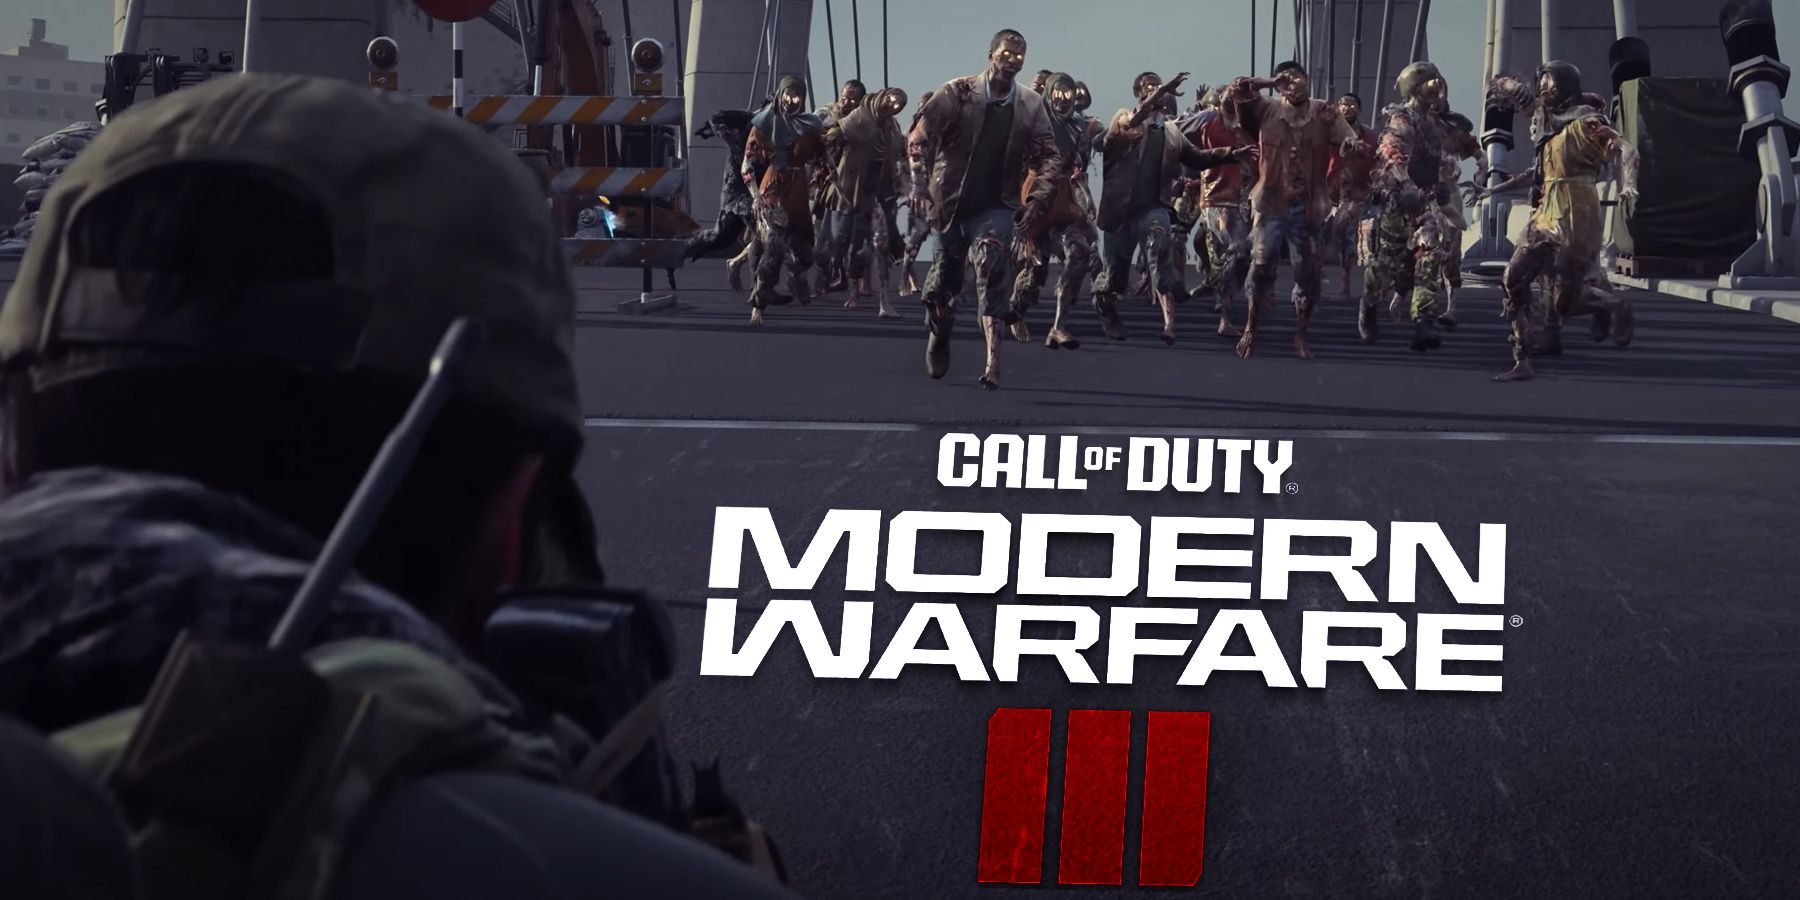 Call of Duty: Modern Warfare III Official Zombies Reveal Trailer